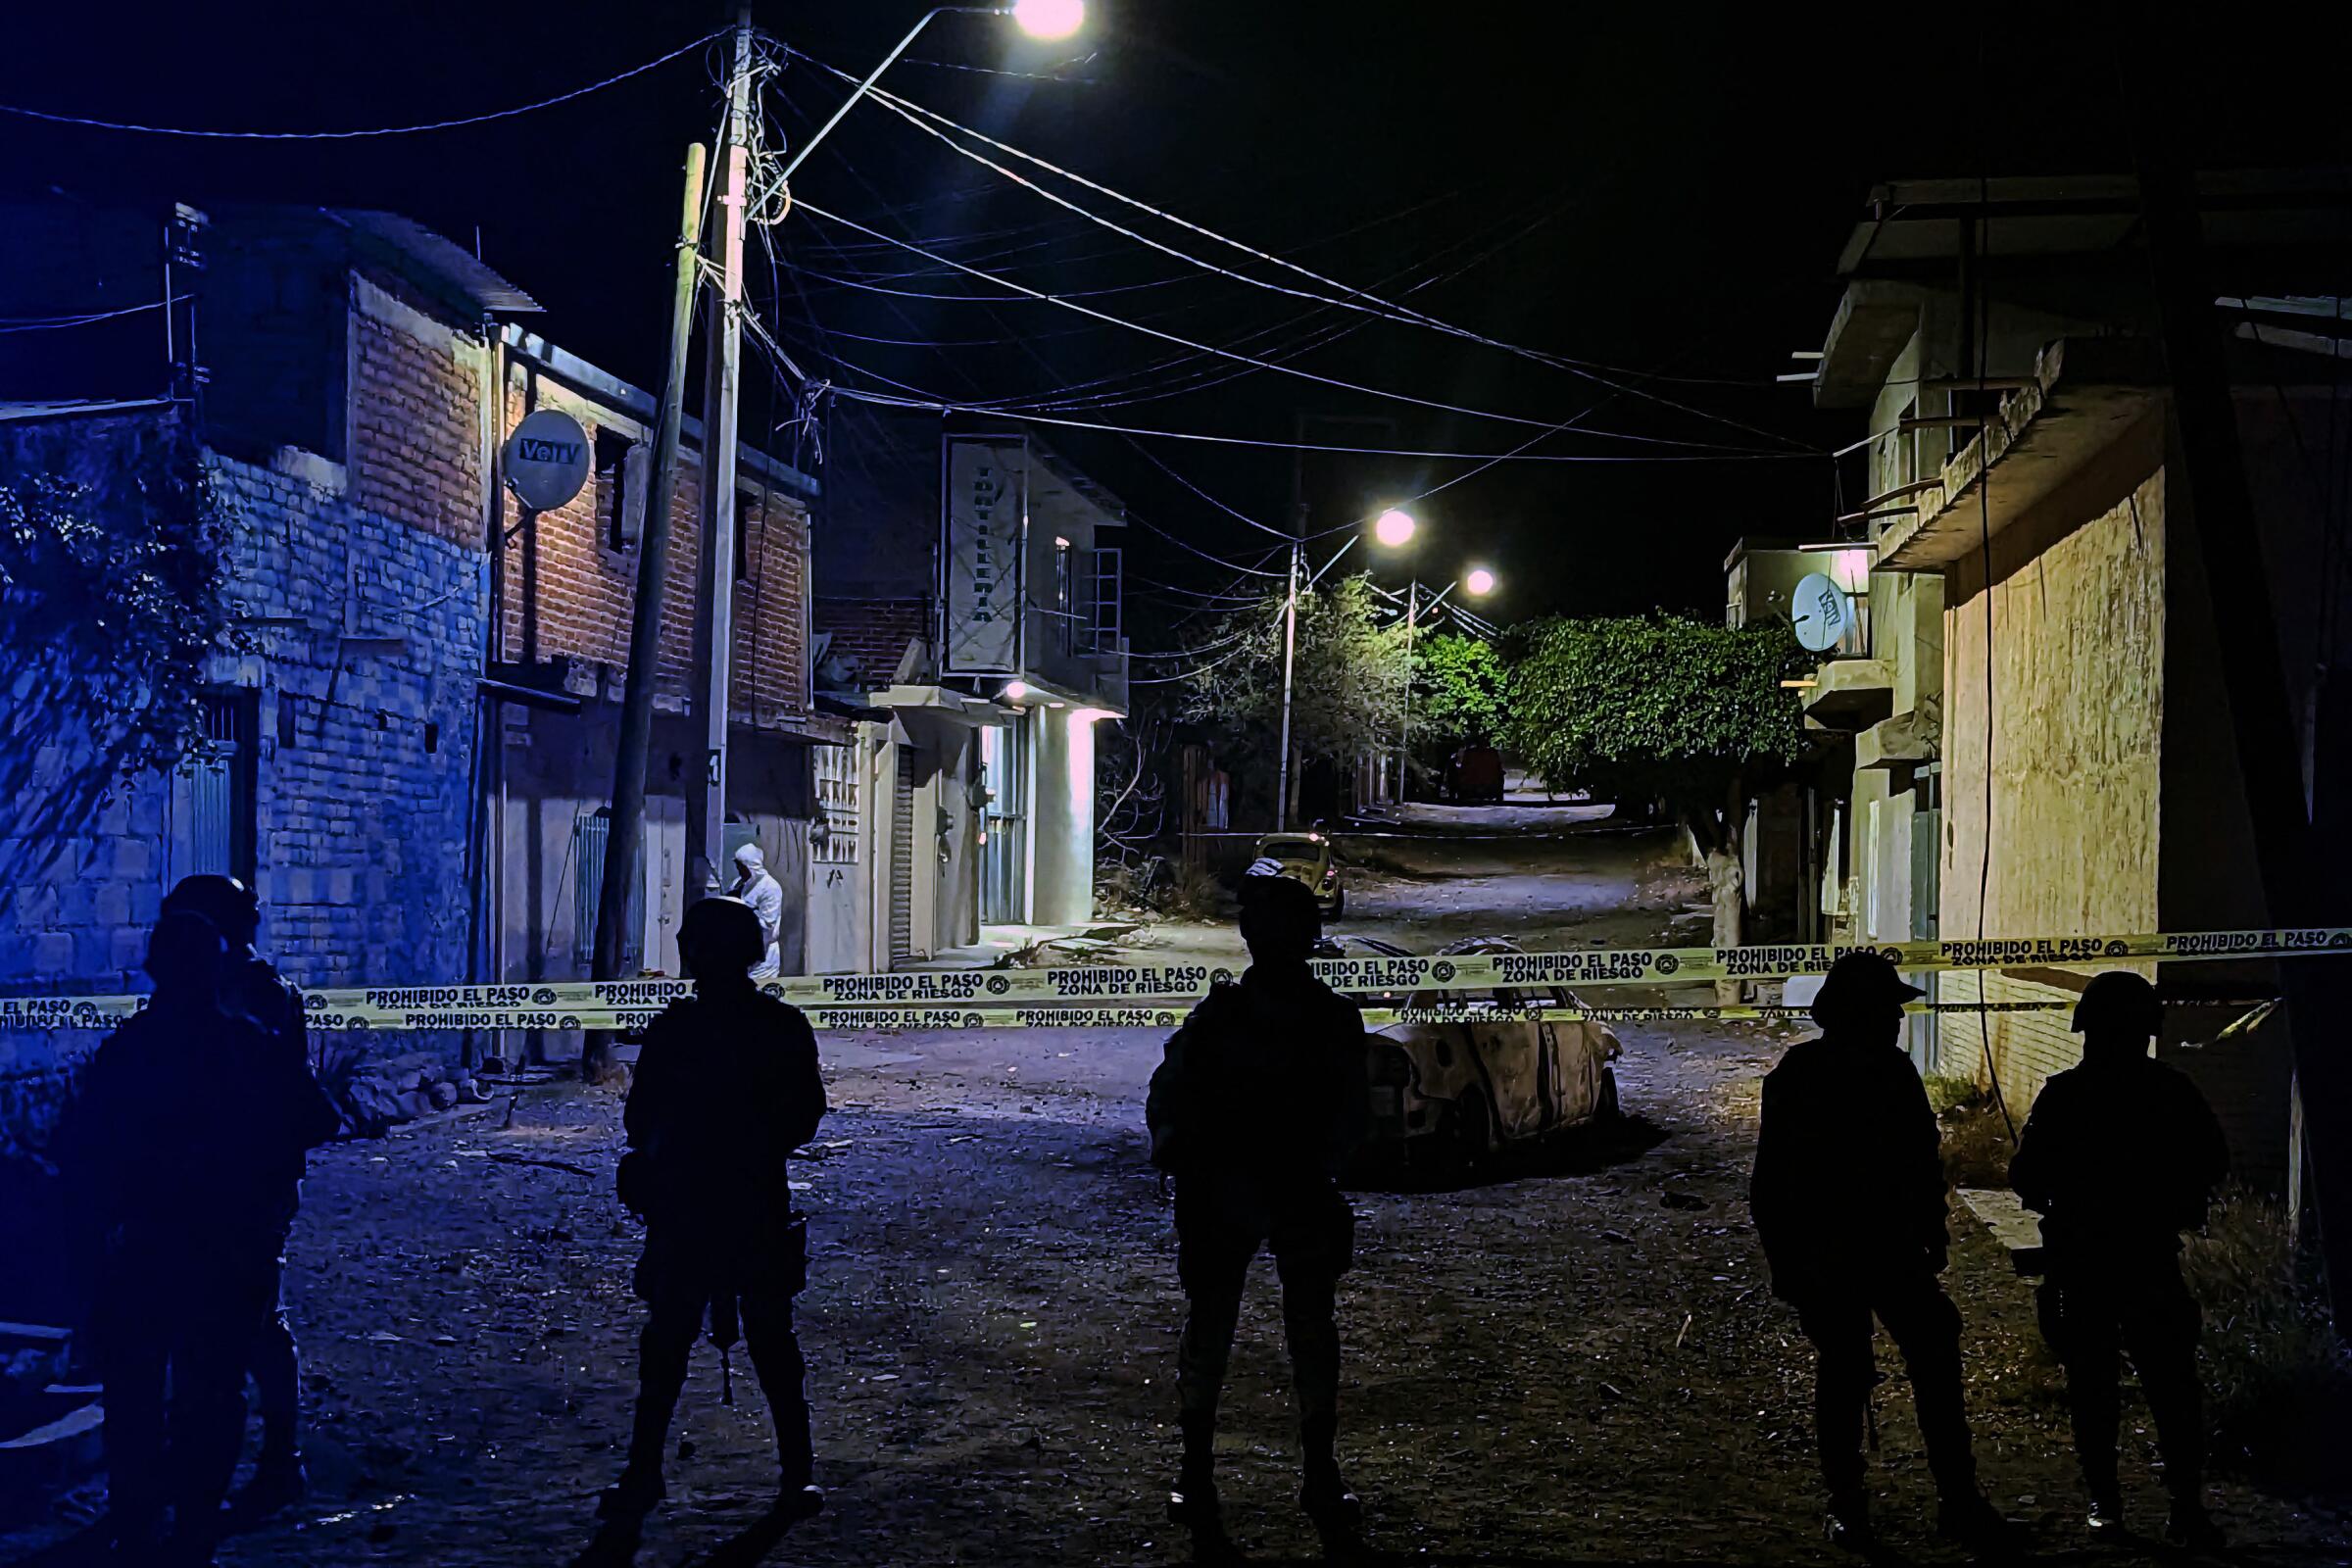 National Guardsmen stand near police tape in a dark street.